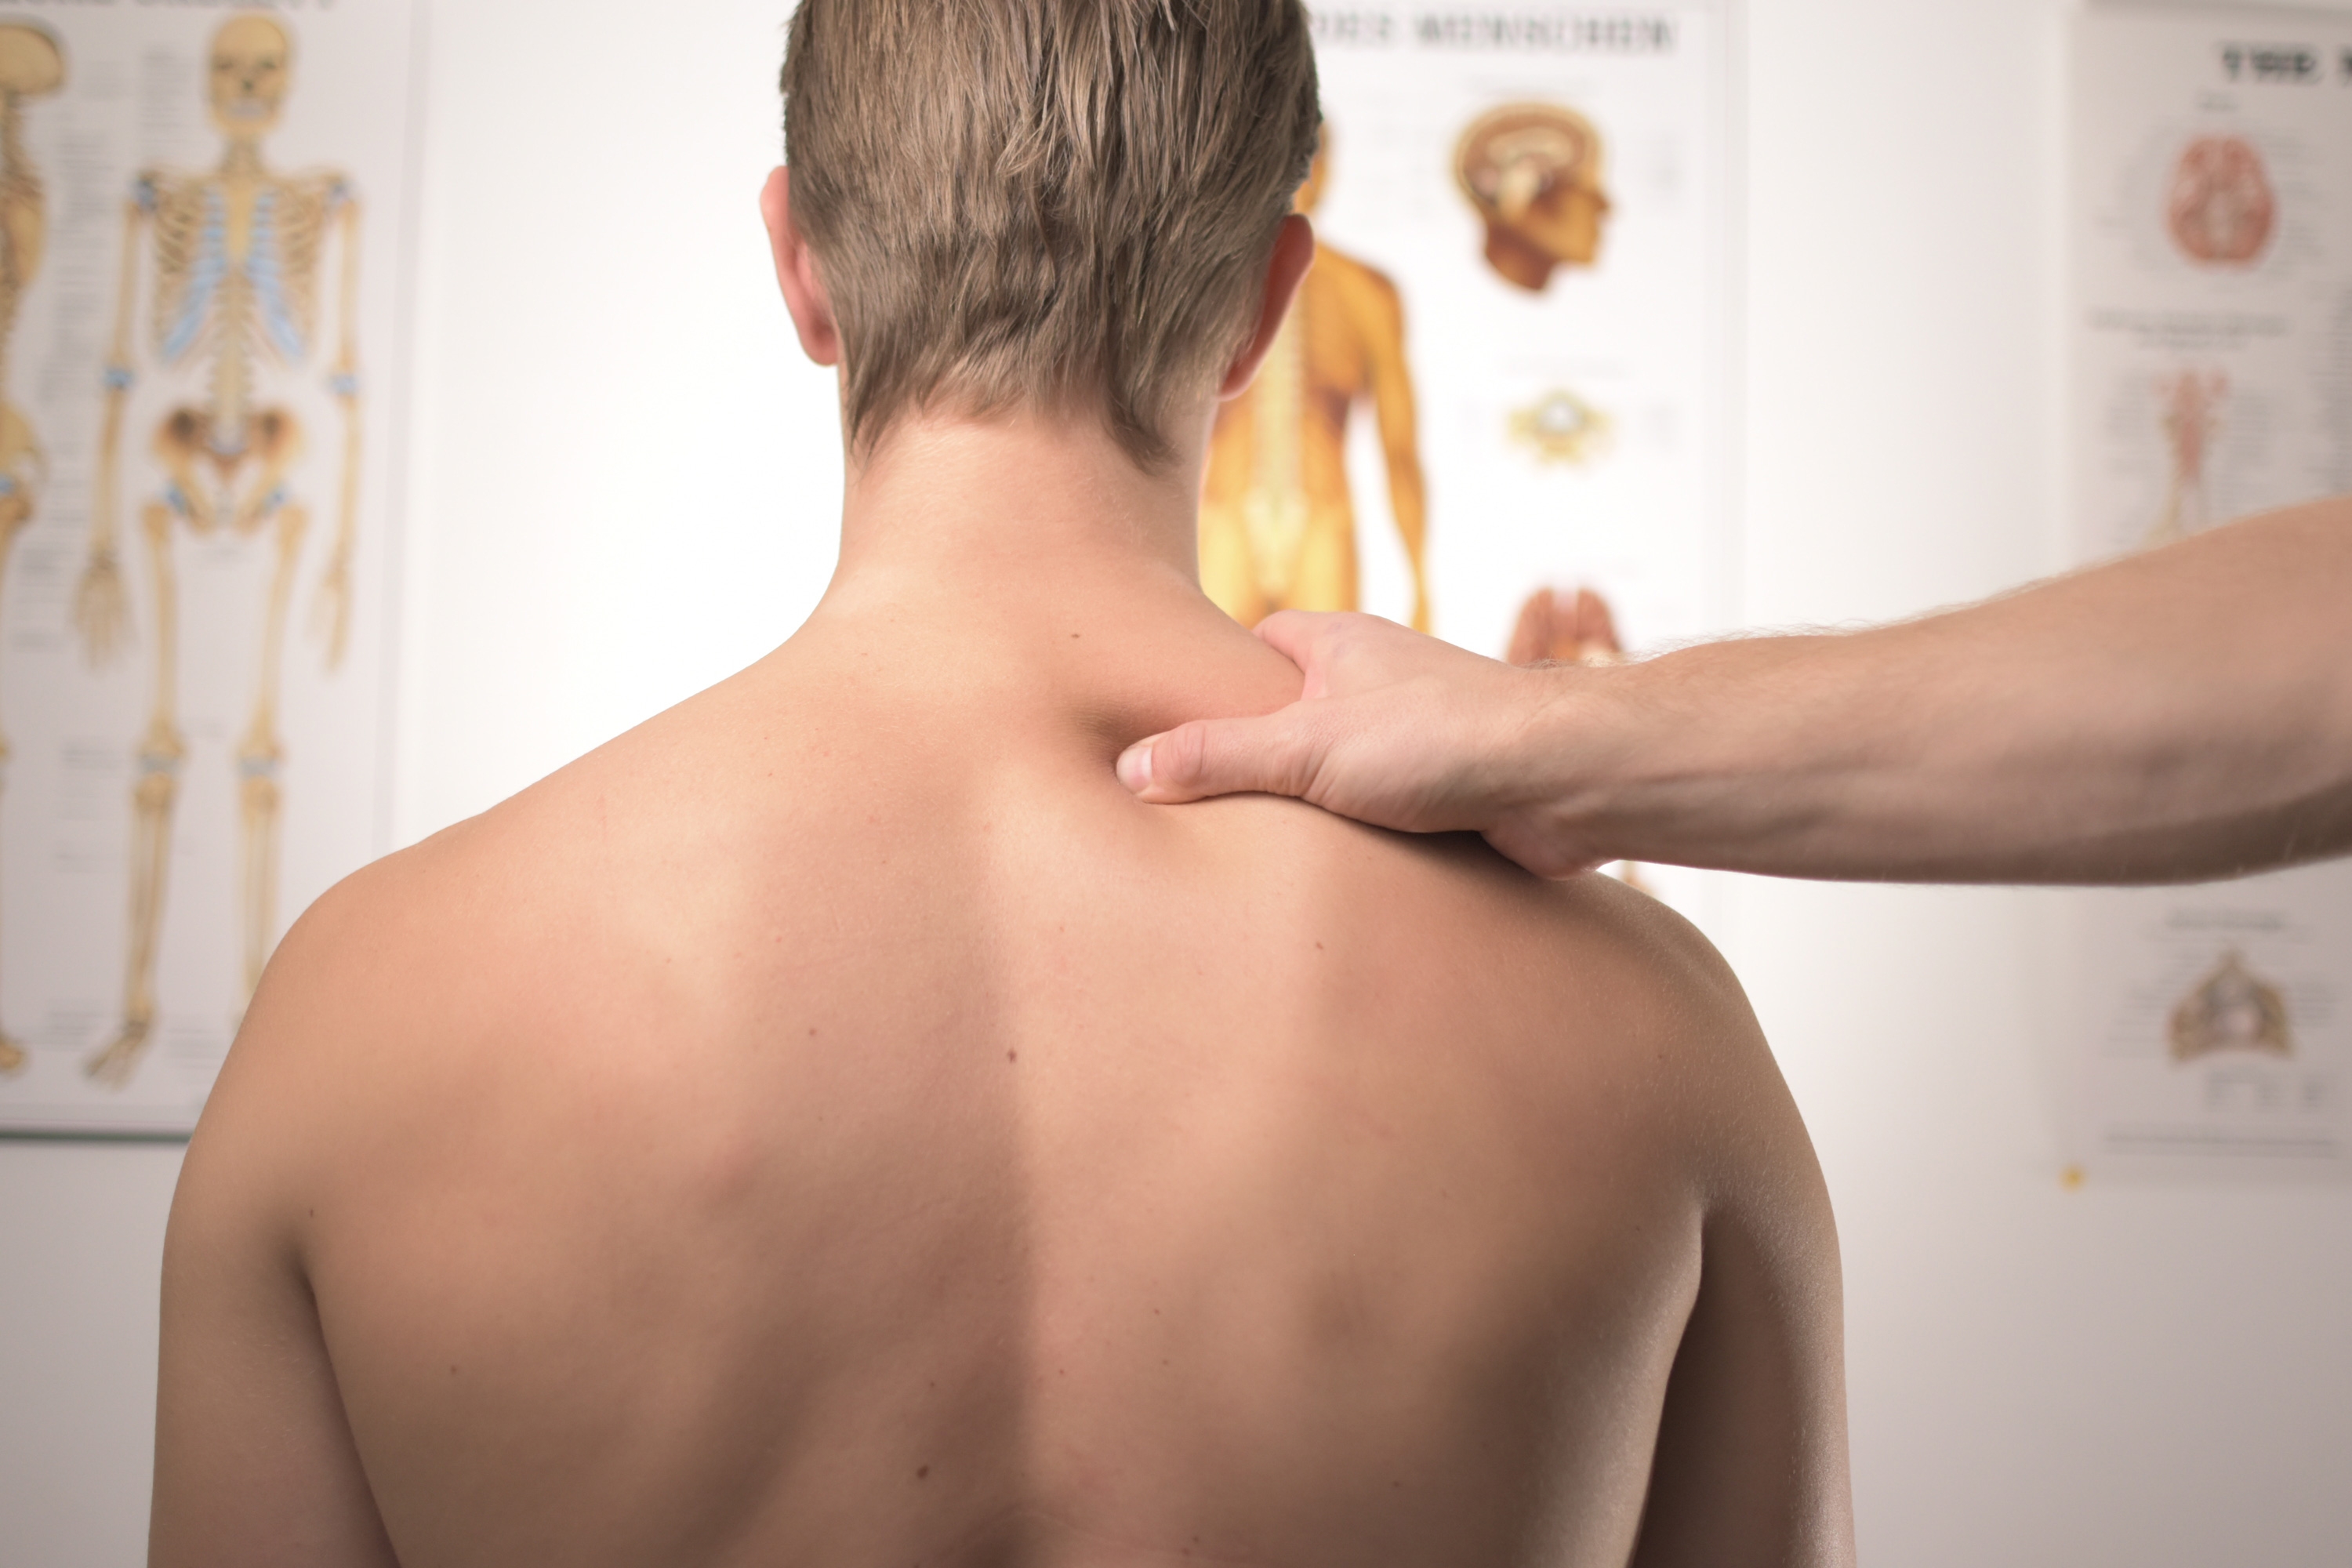 Back massage. Back massage scheme and technique. Basic massage